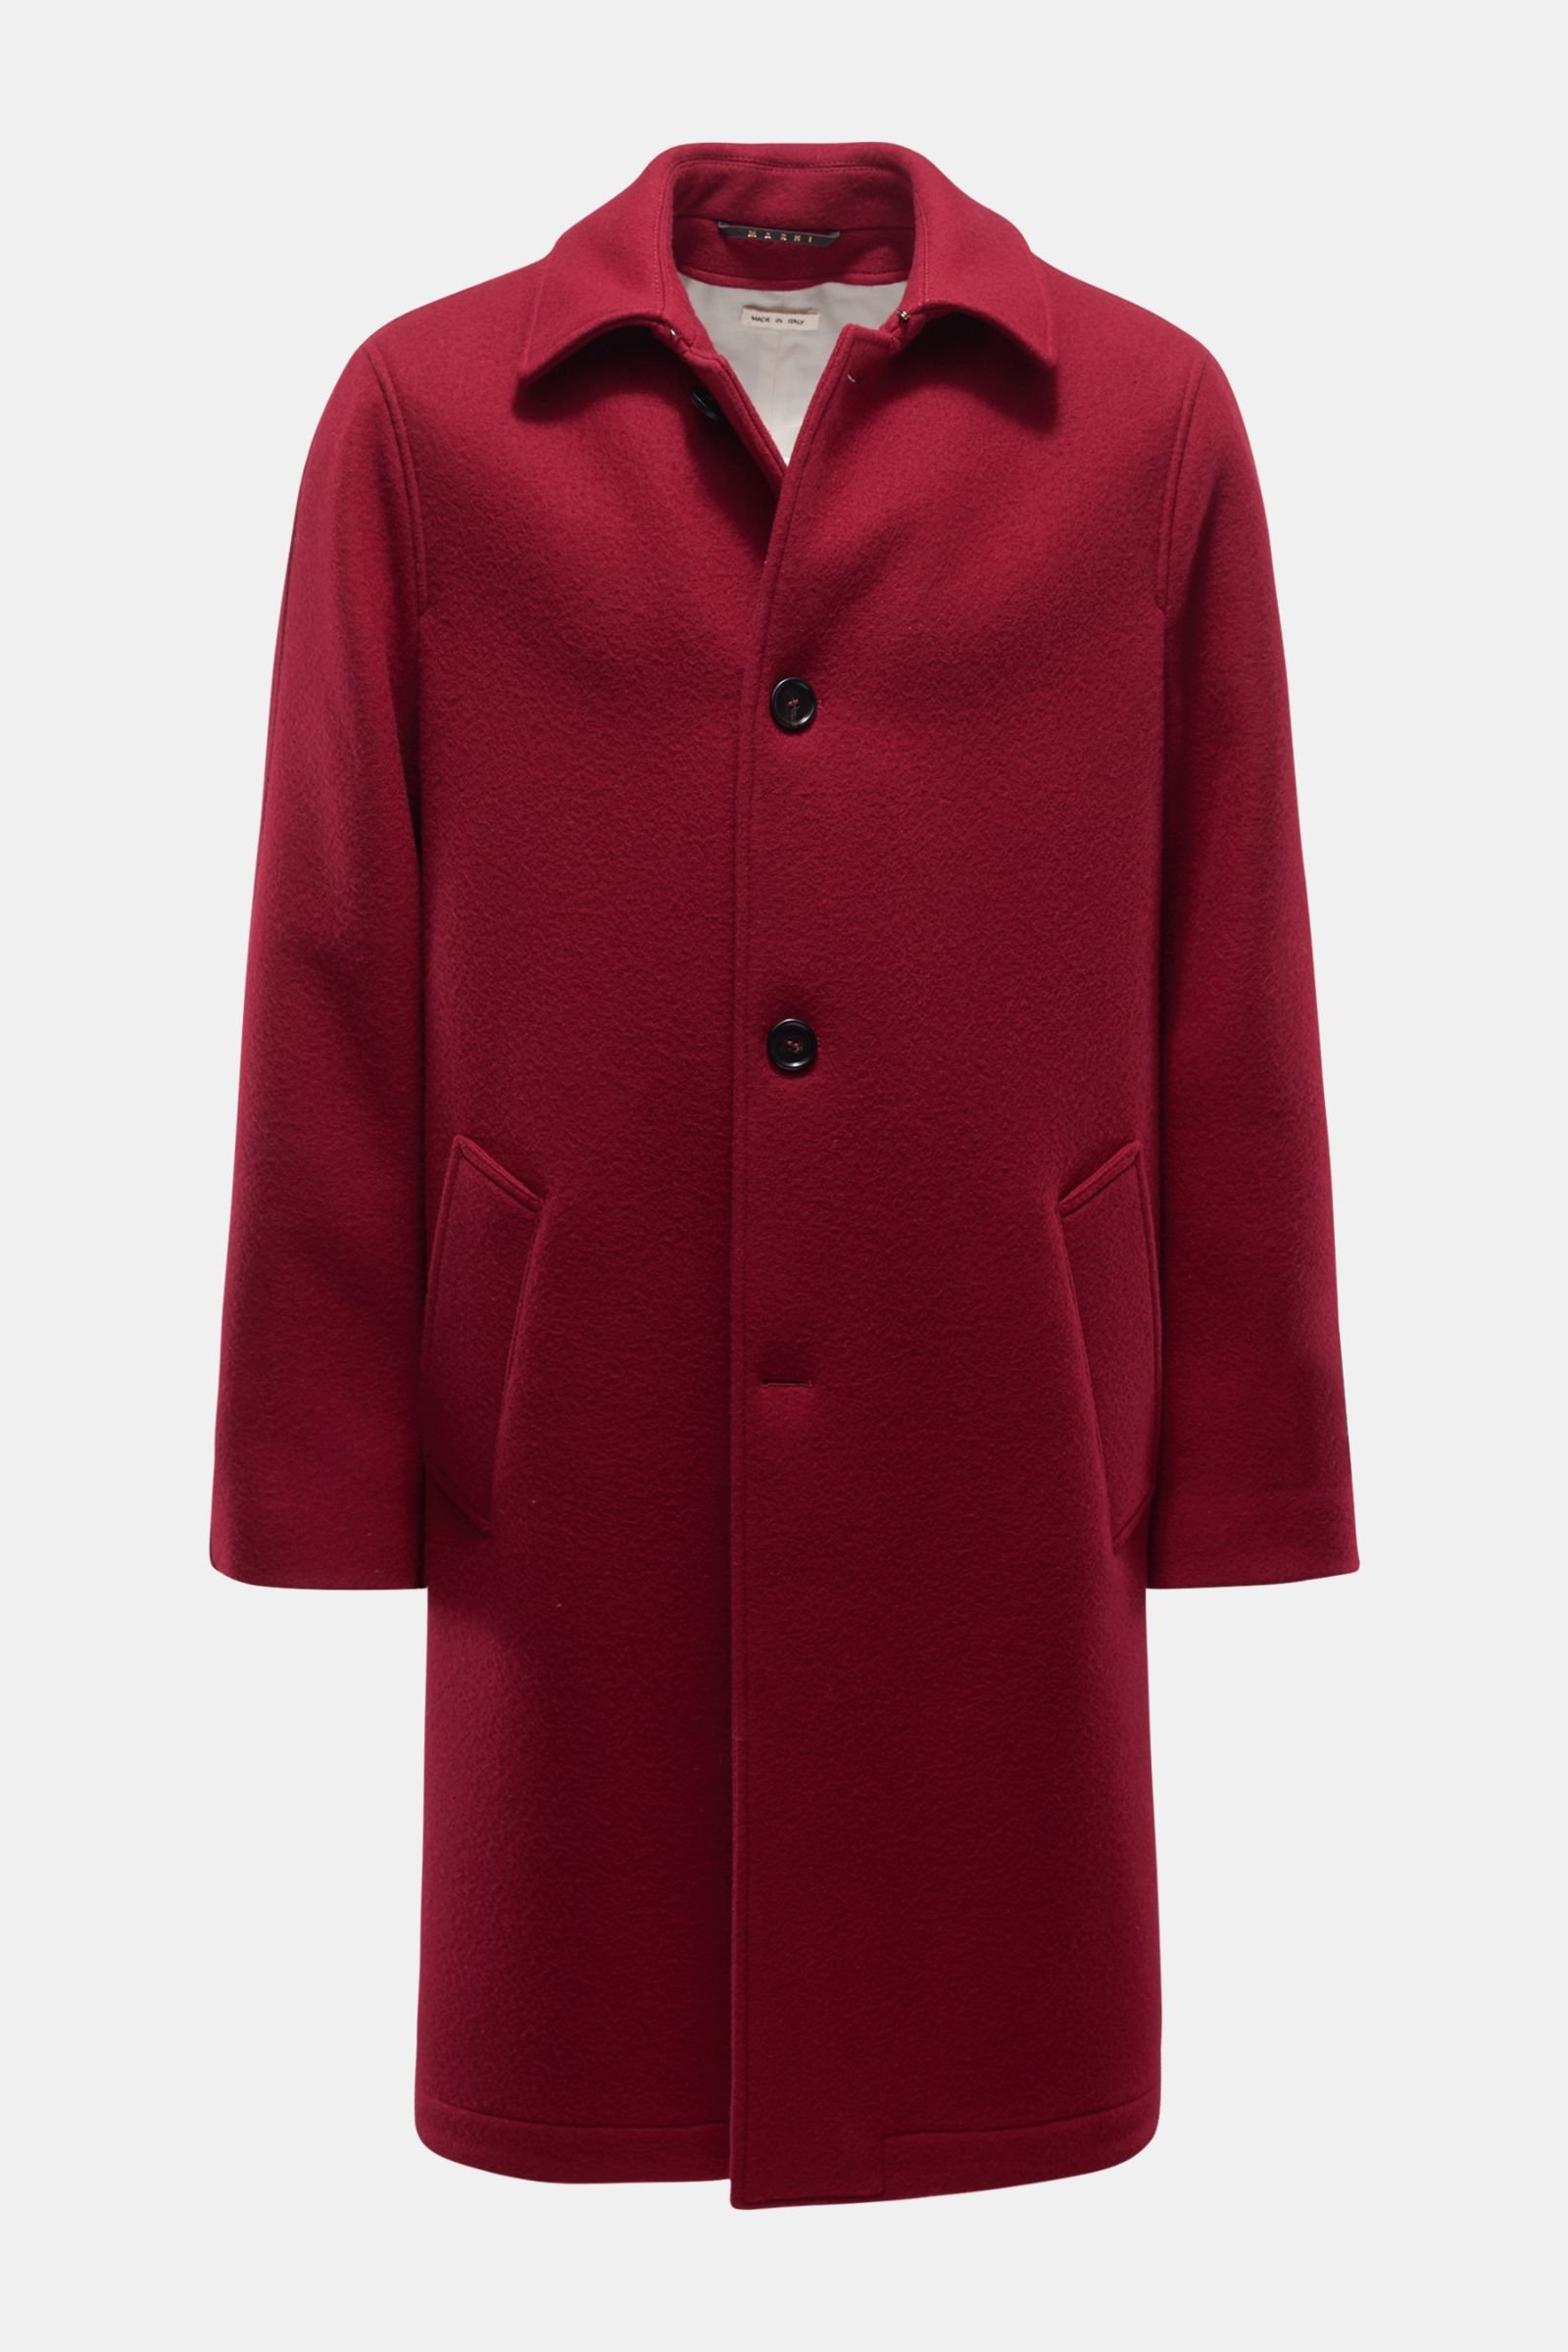 Wool coat dark red